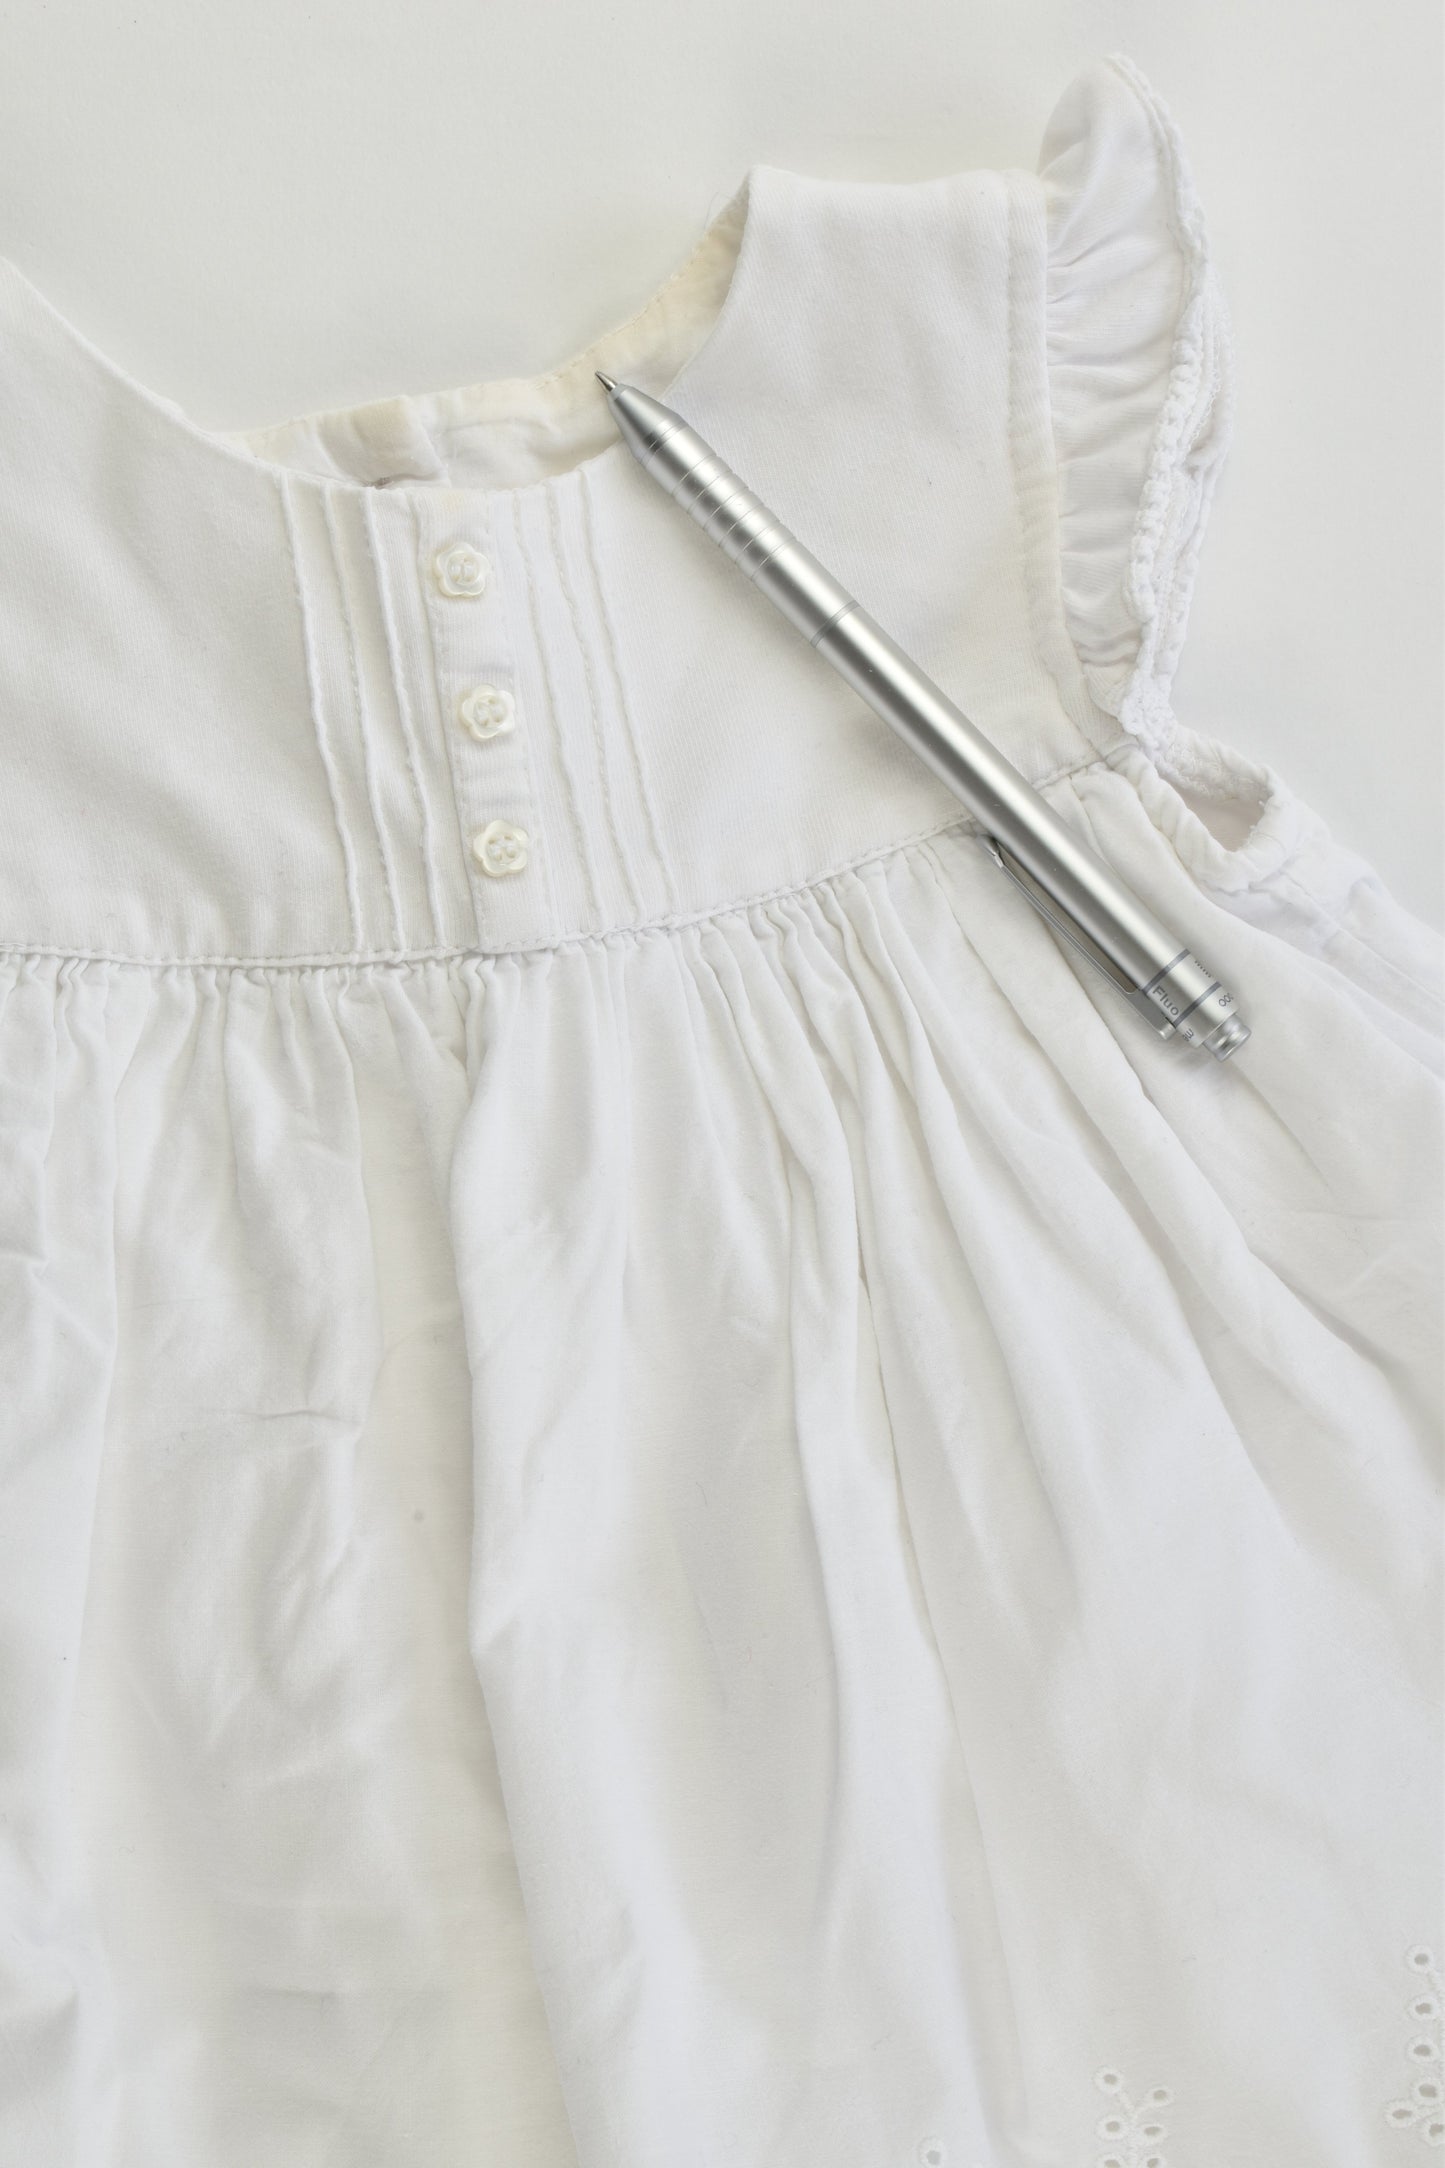 Mothercare Size 0 (9-12 months, 80 cm) Lace Dress with Bodysuit Underneath